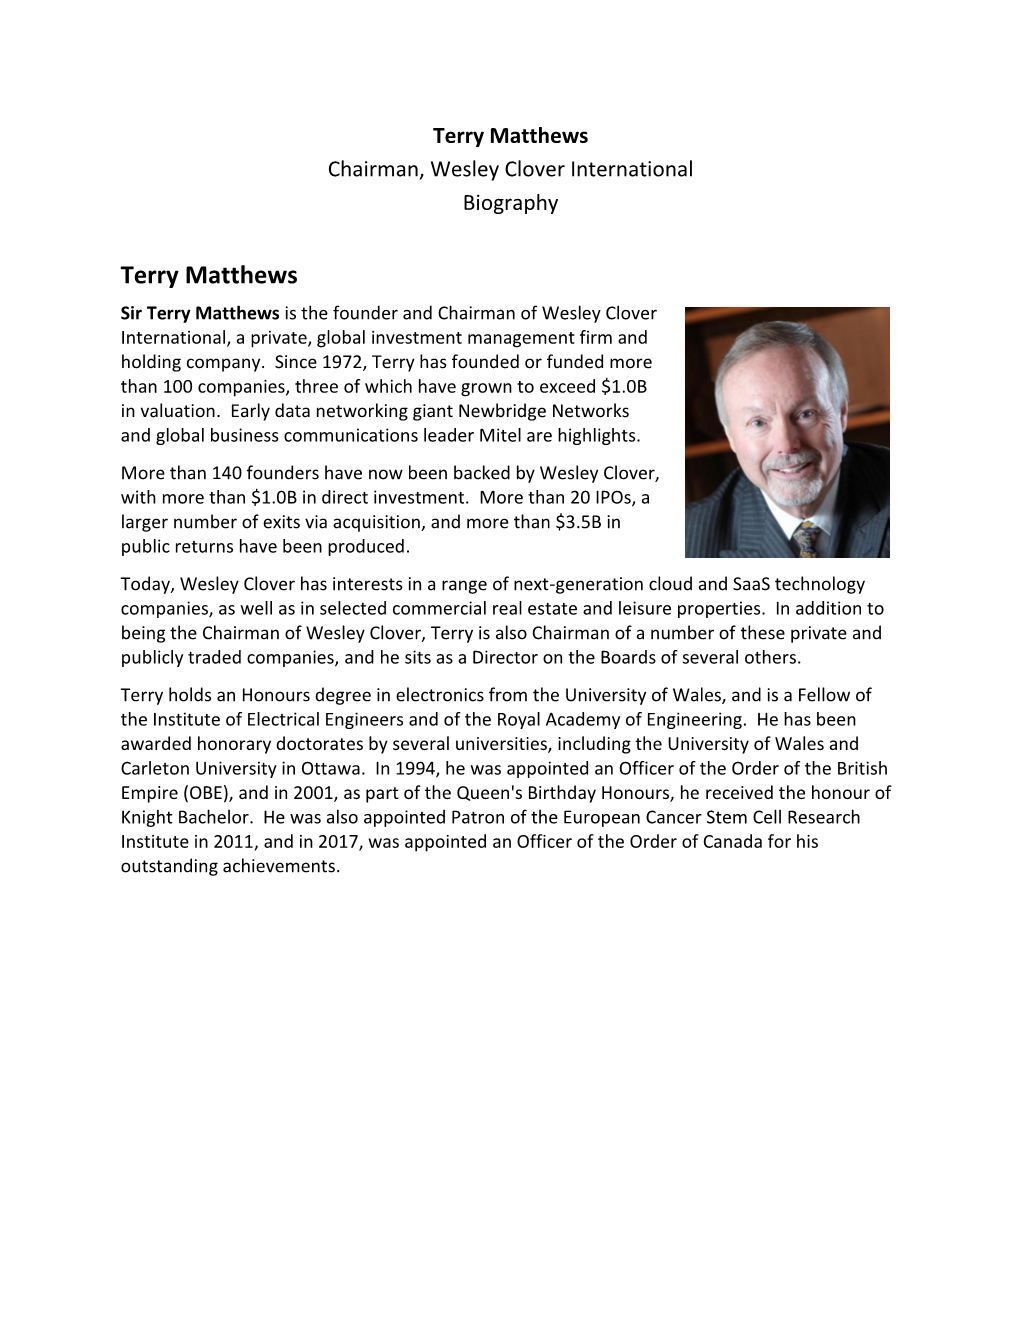 Terry Matthews Chairman, Wesley Clover International Biography